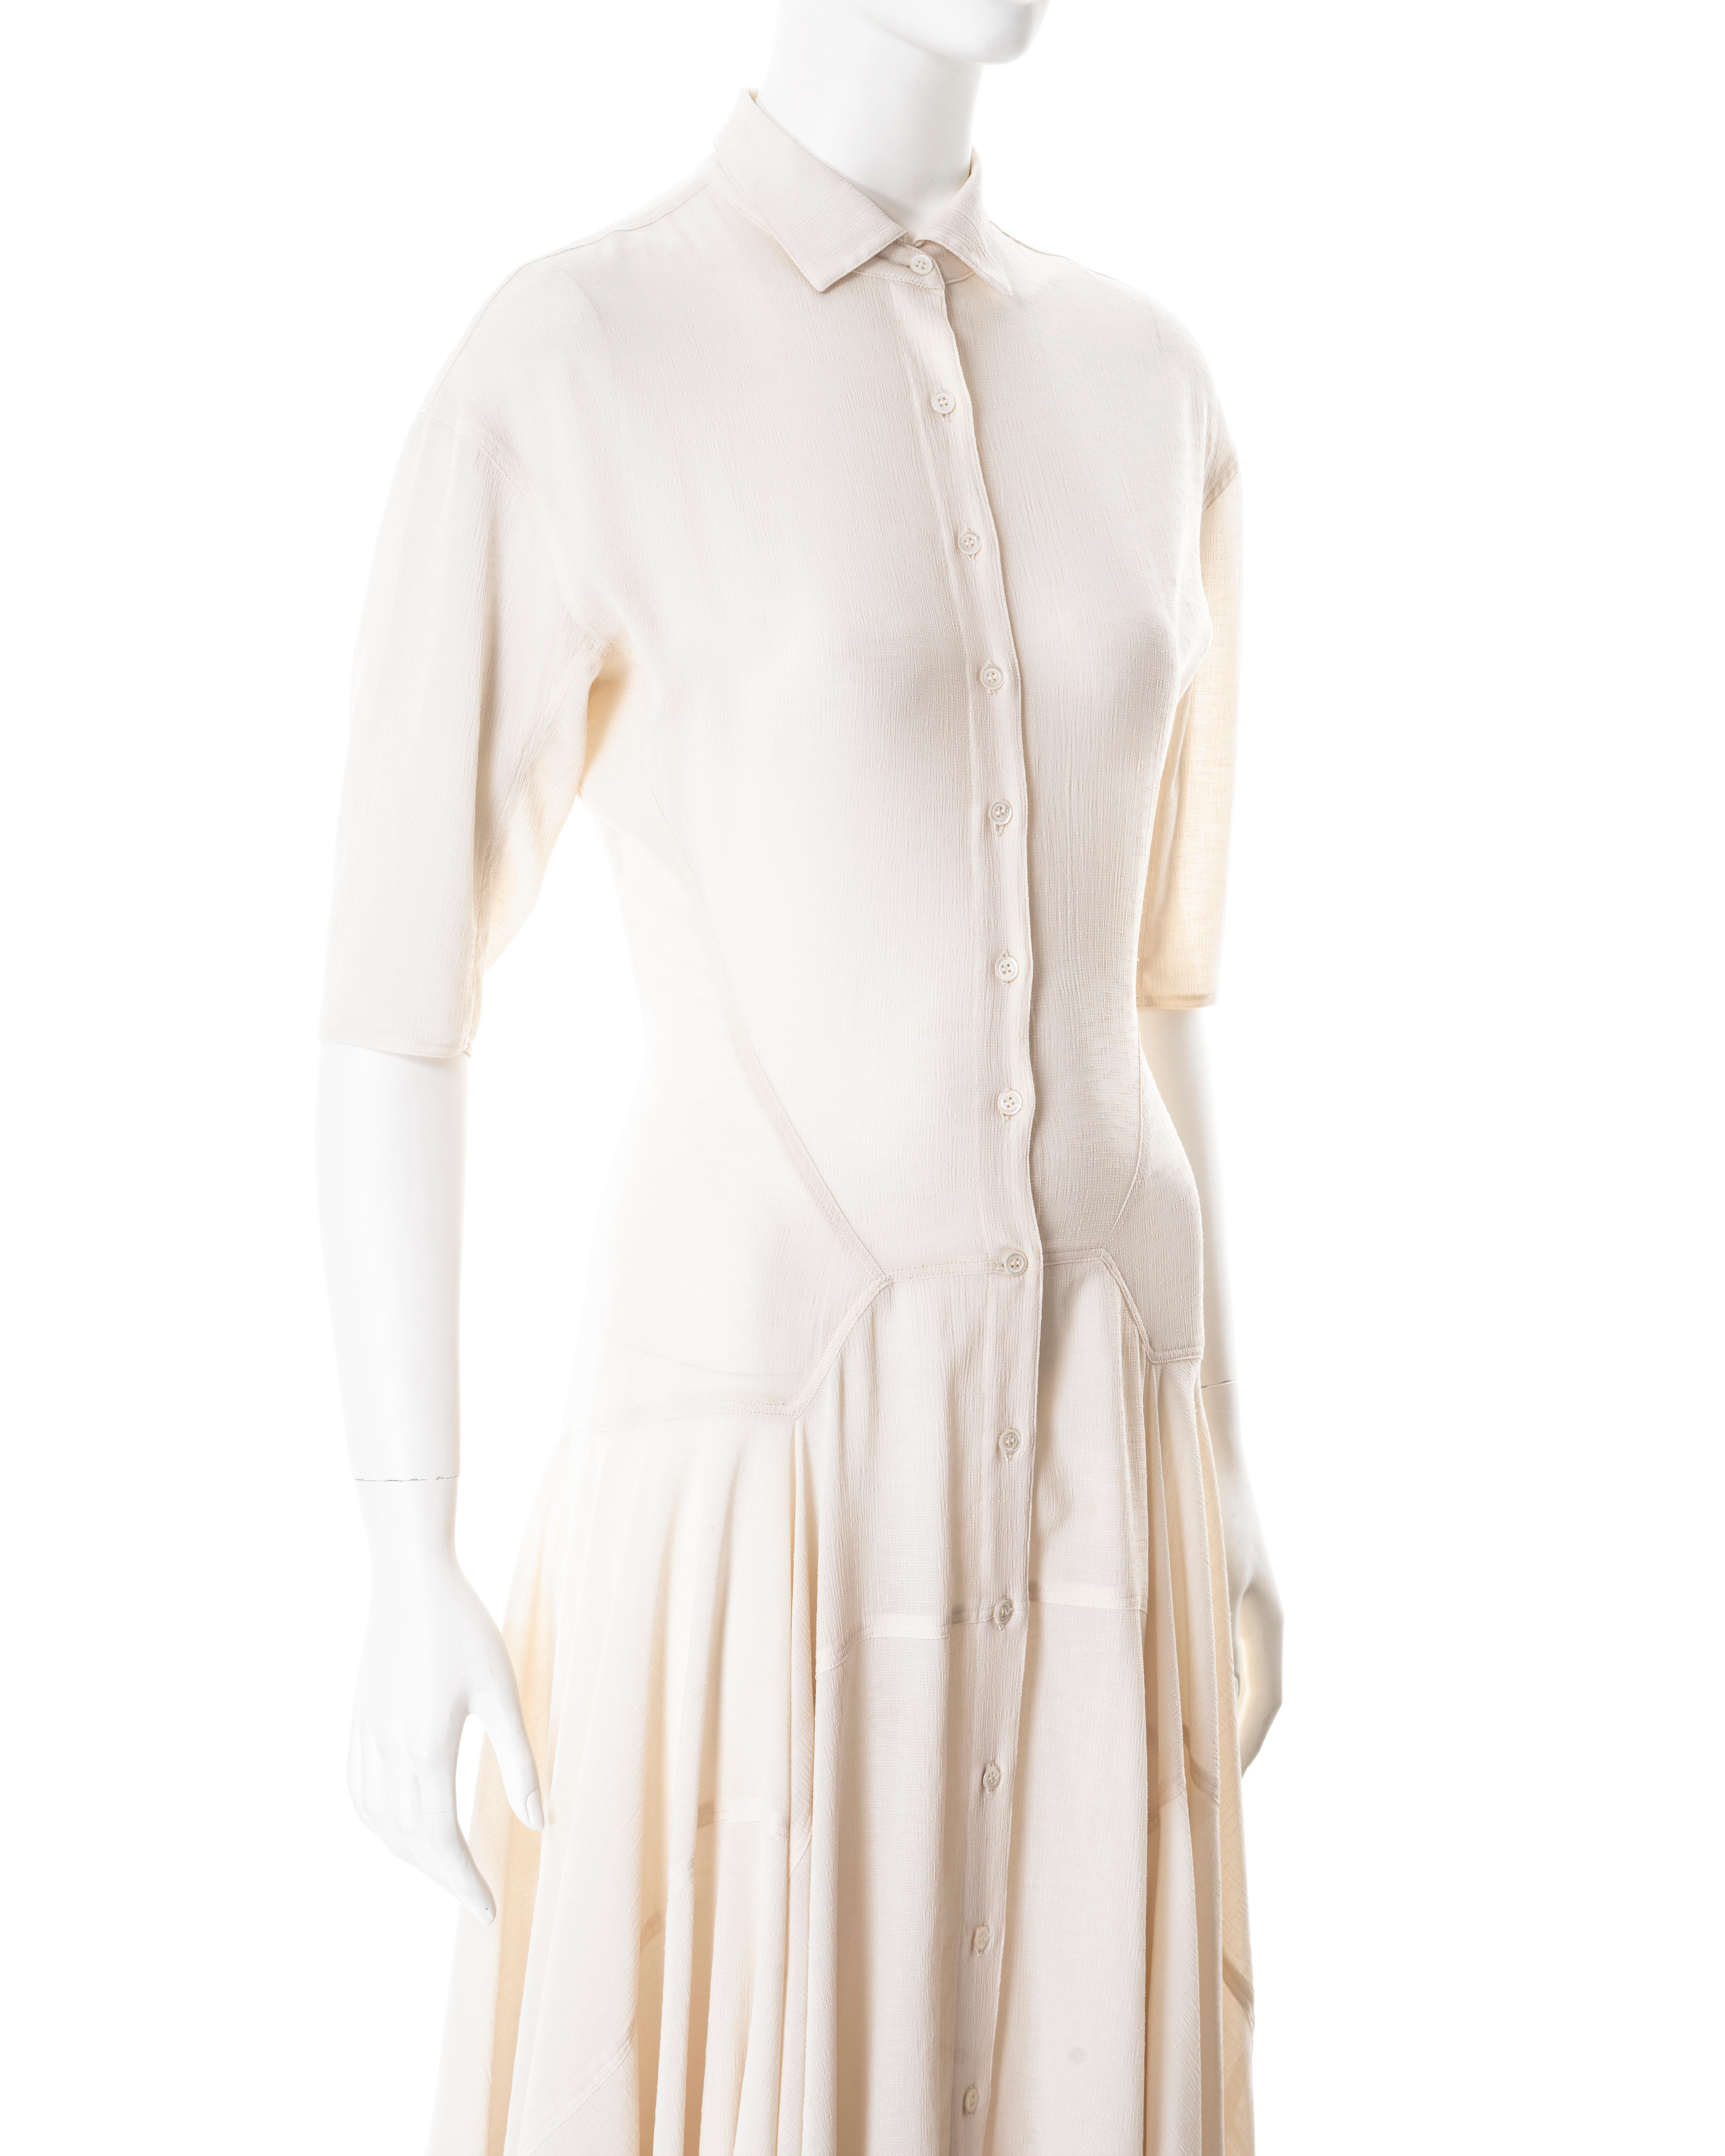 Azzedine Alaia ivory summer shirt dress, ss 1987 3